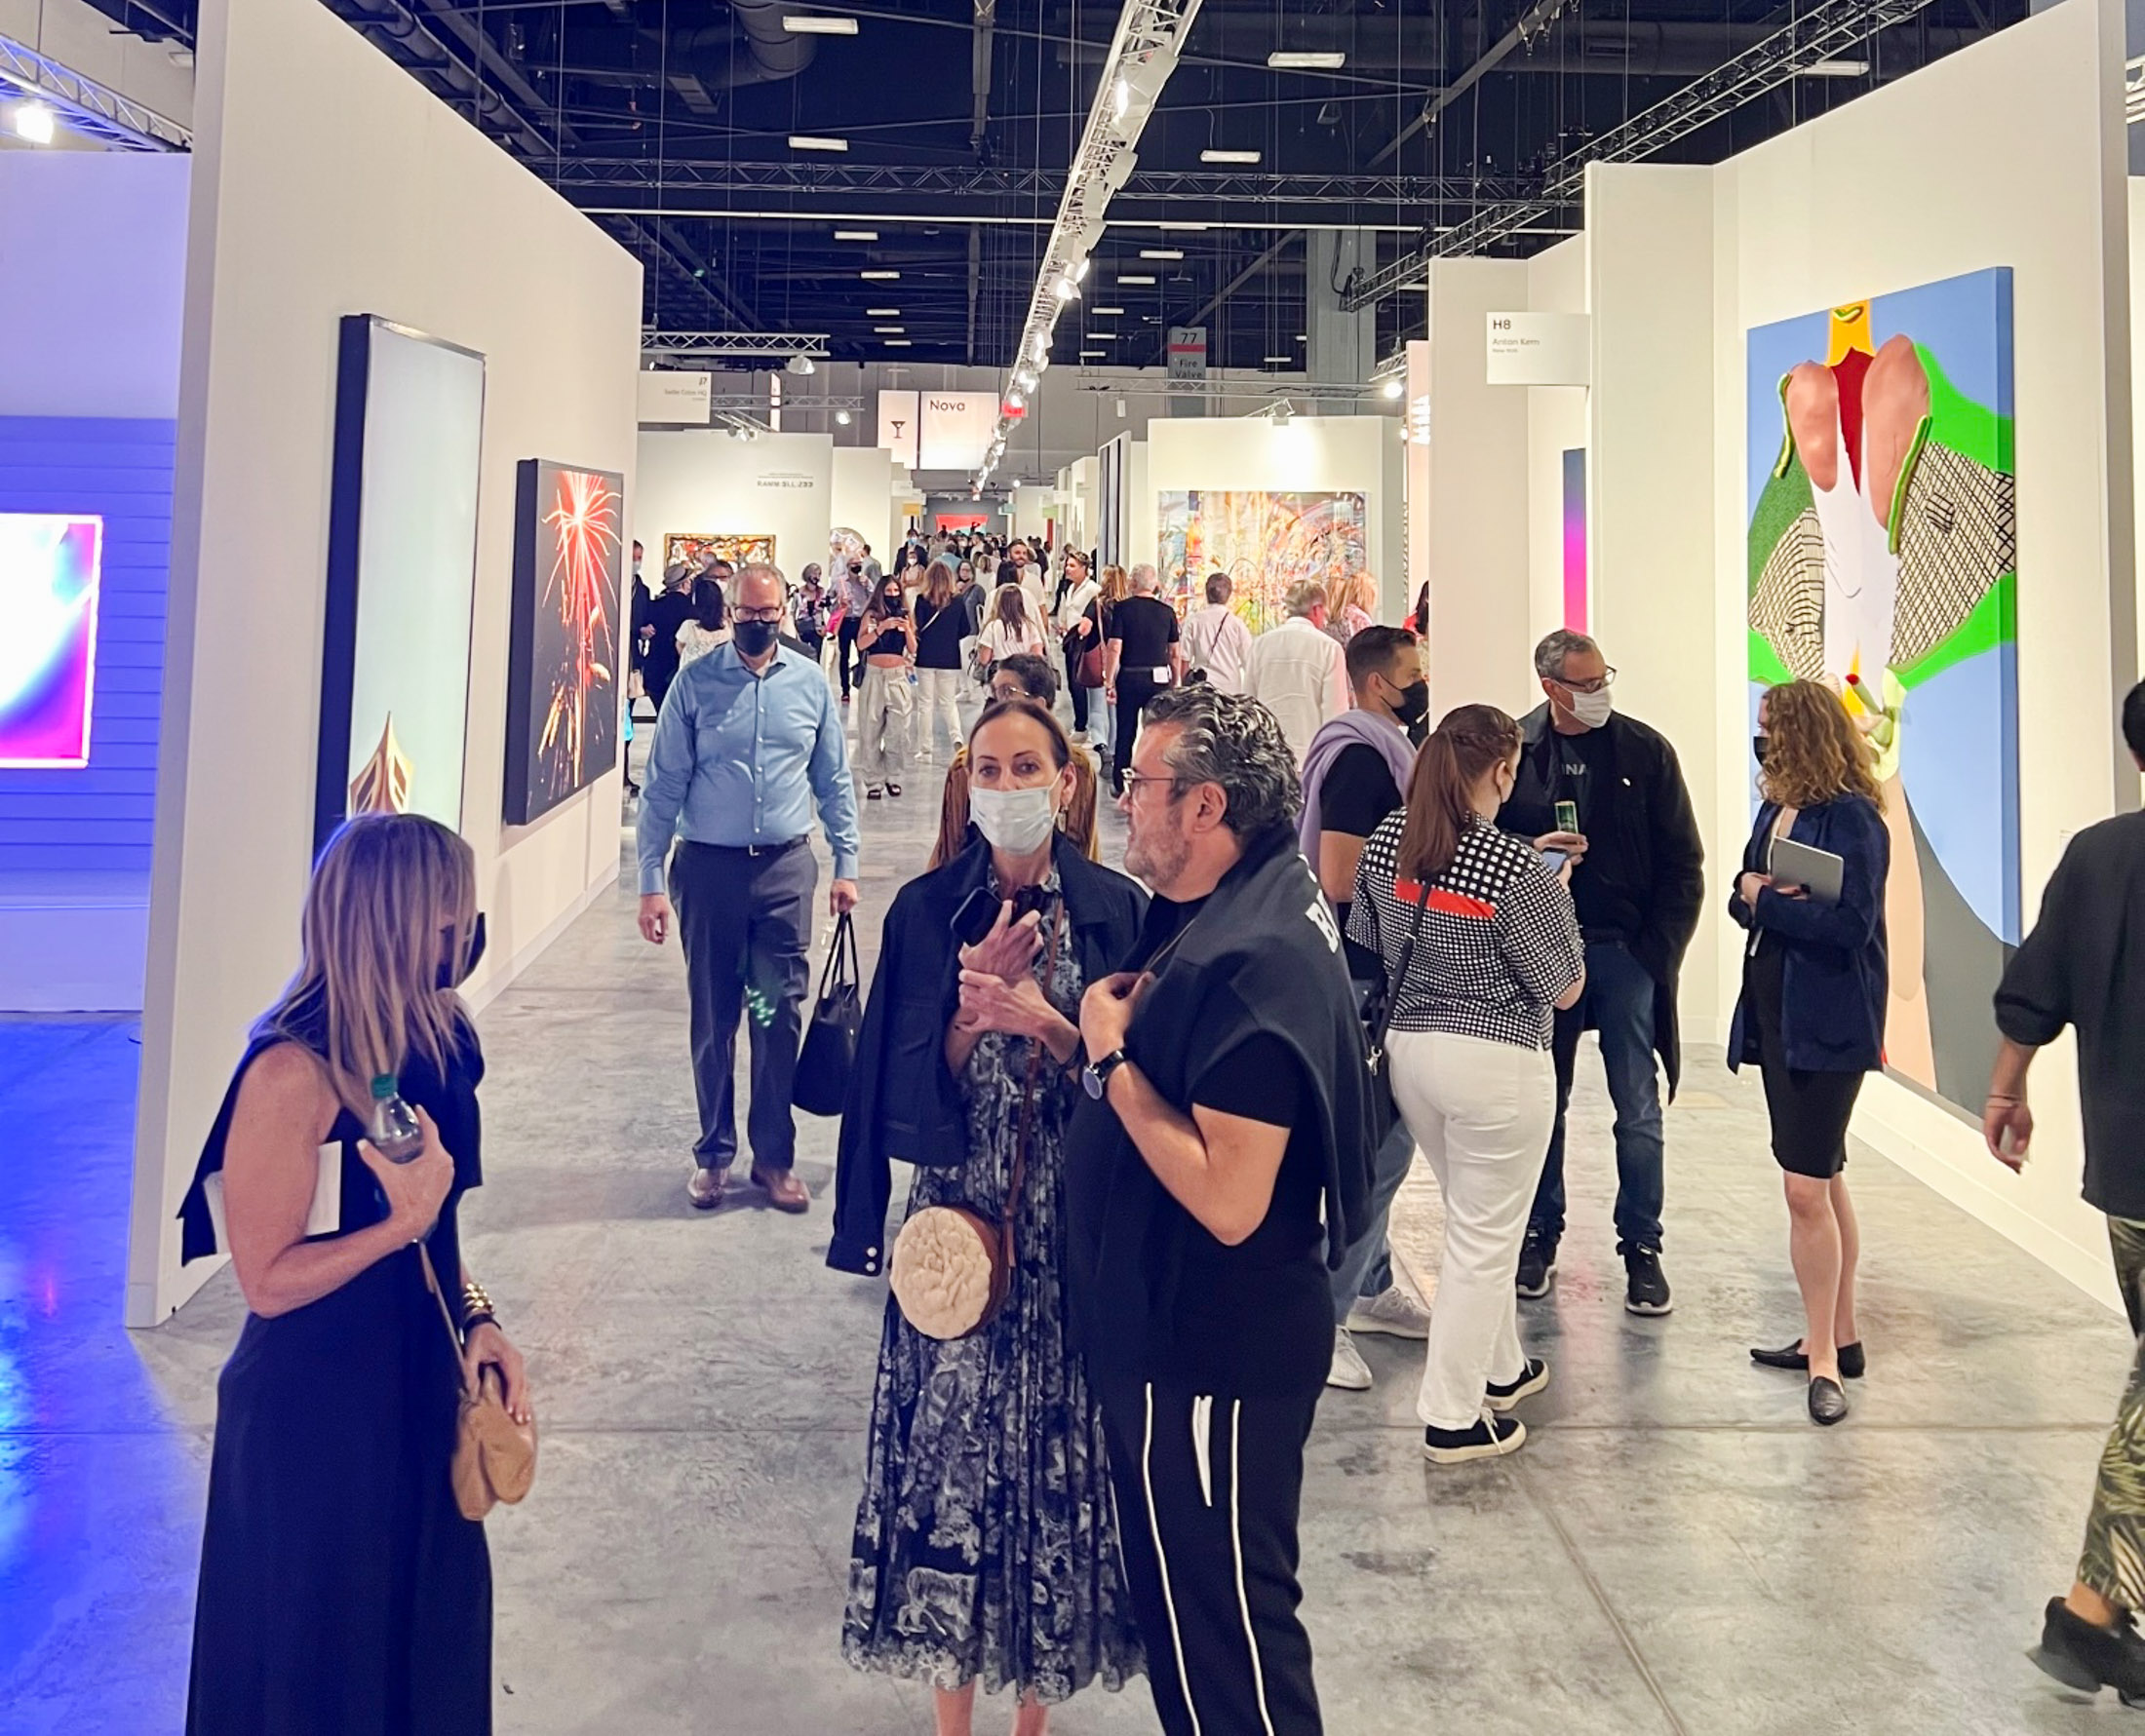 Art Basel's show in Miami Beach